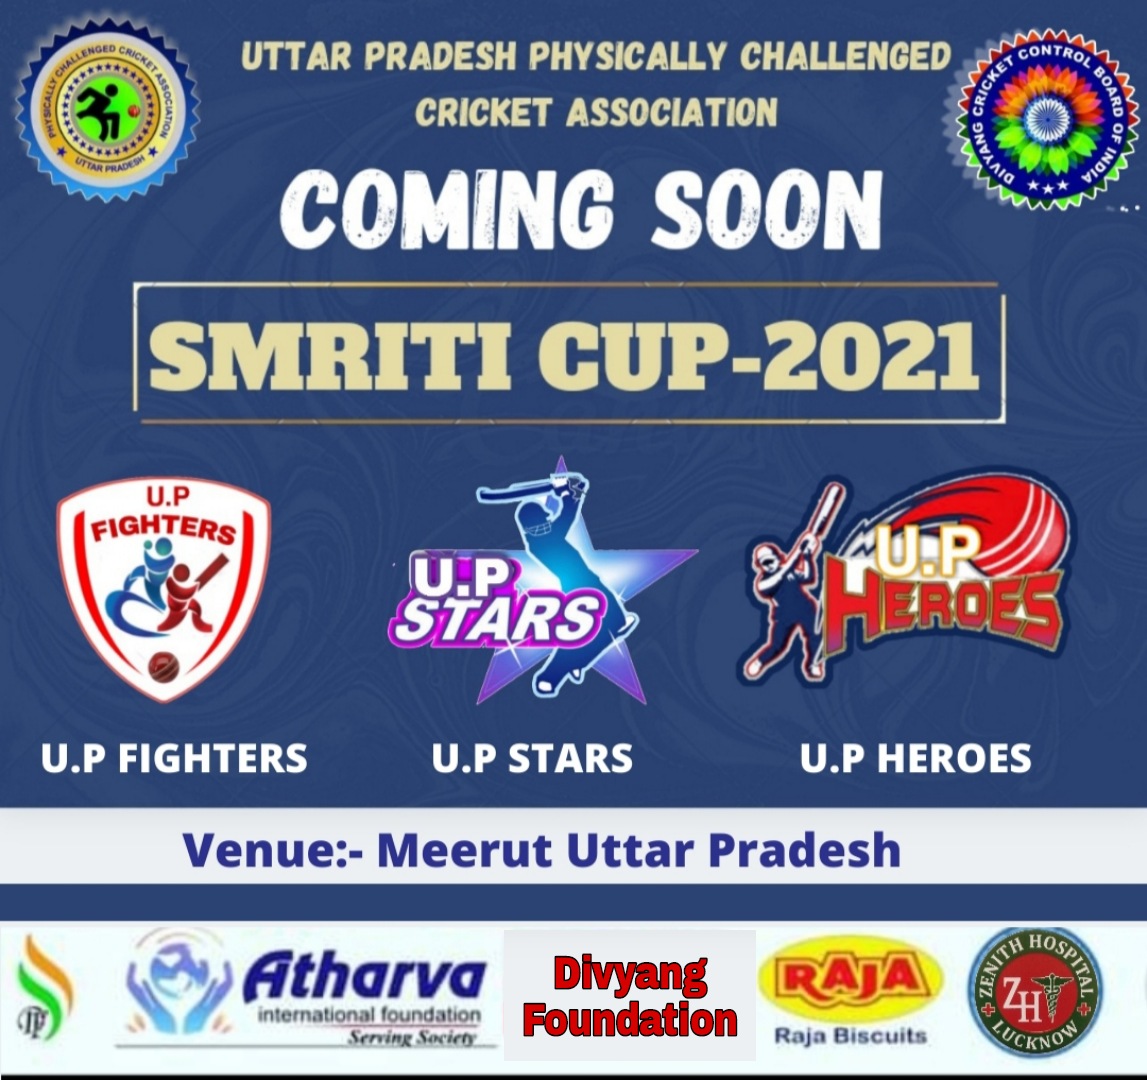 Coming soon Smriti cup
#DivyangCricketControlBoardofIndia #Dccbi #upca #BCCI